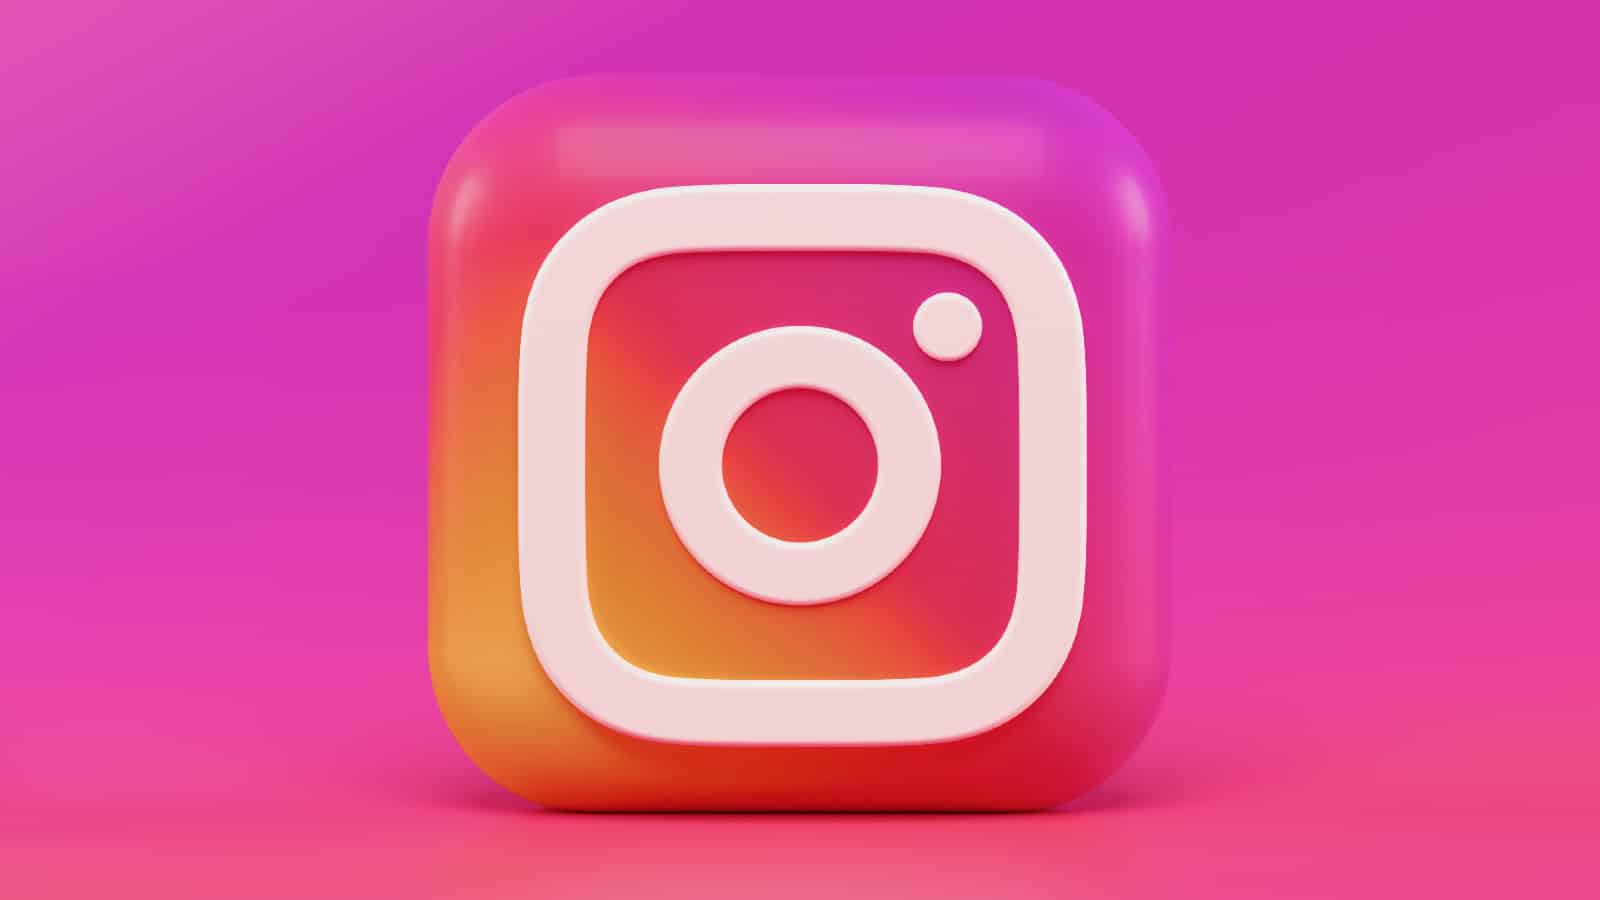 Instagram logo on a pink background